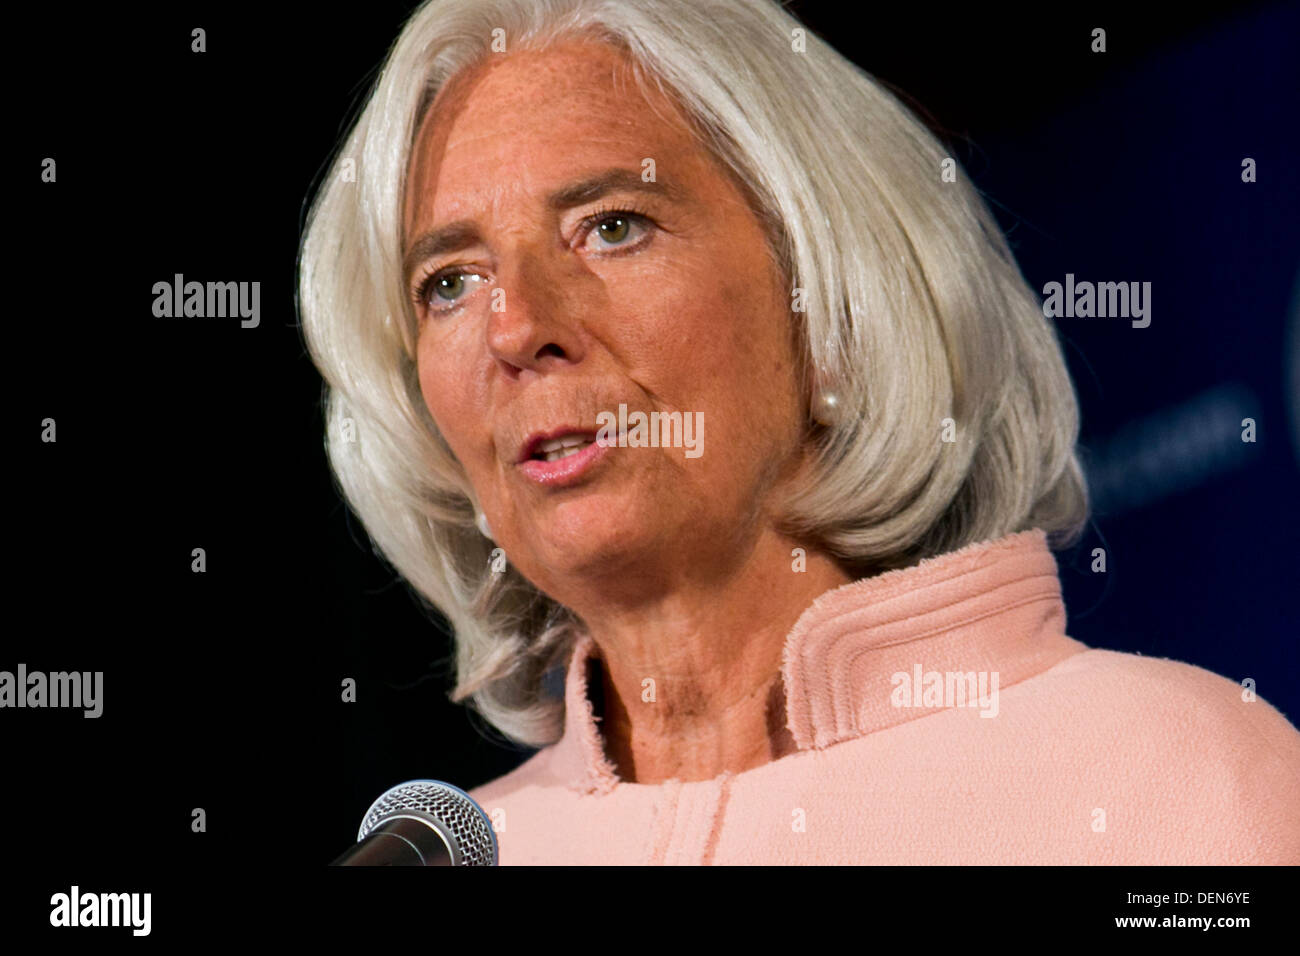 Christine Lagarde, Managing Director of the International Monetary Fund (IMF).  Stock Photo